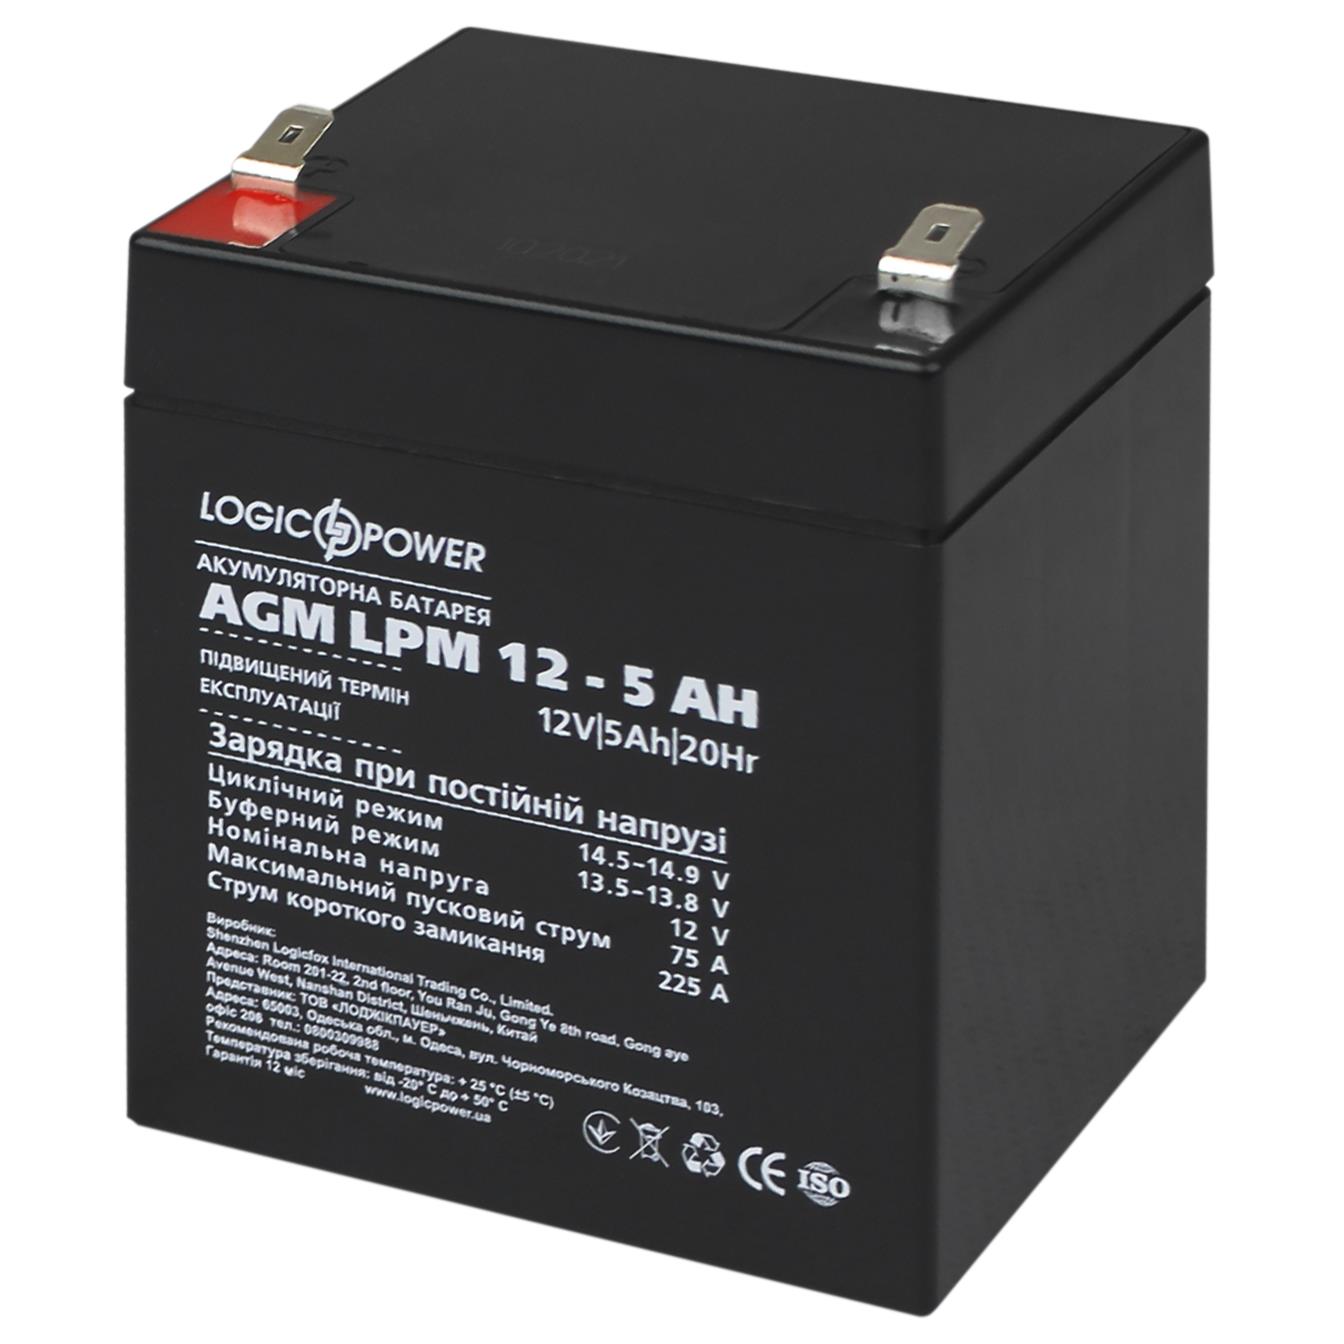 Инструкция аккумулятор для ибп LogicPower AGM LPM 12V - 5 Ah (3861)